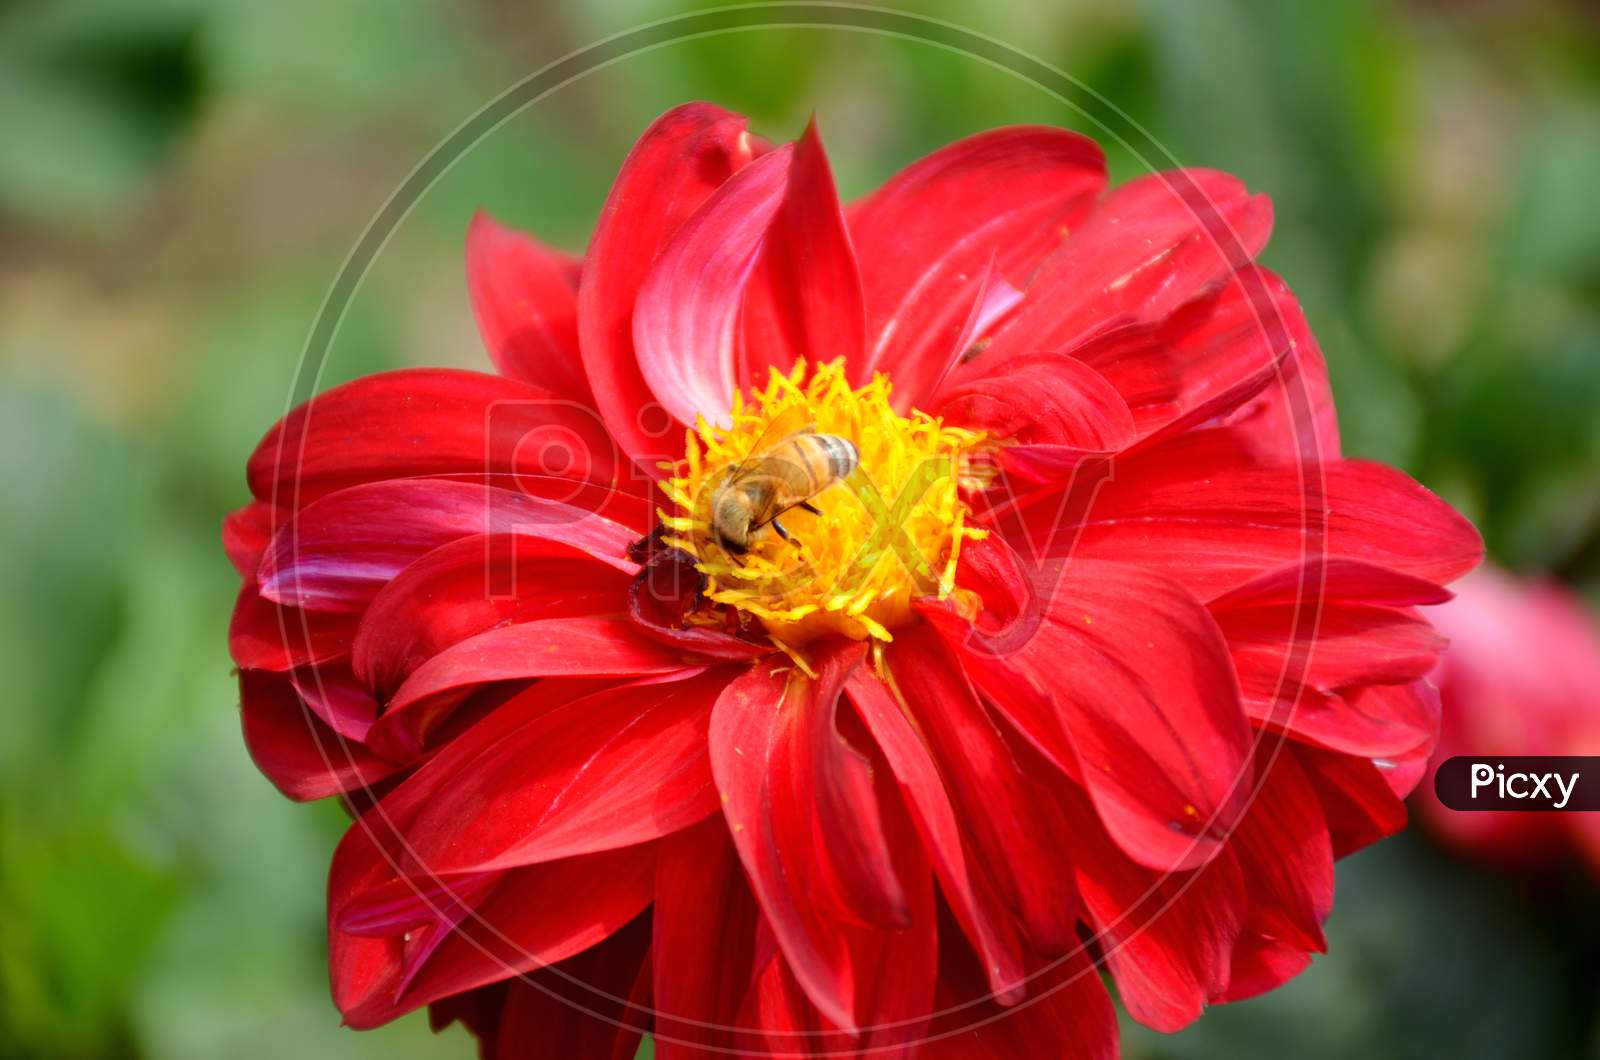 beautifull red dahlia flower in side honeybee.